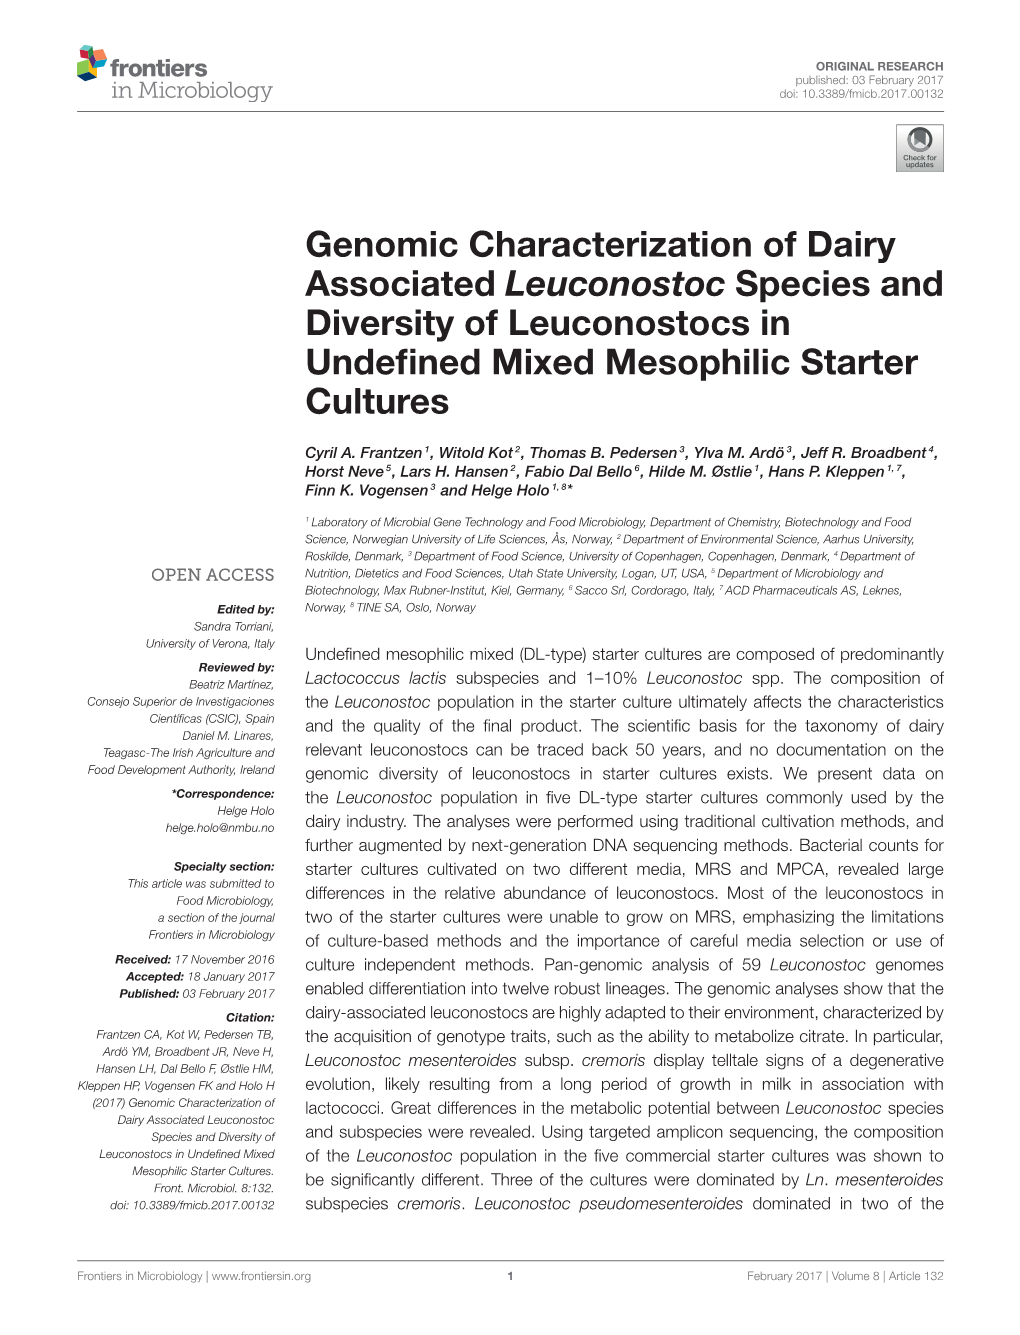 Genomic Characterization of Dairy Associated Leuconostoc Species and Diversity of Leuconostocs in Undeﬁned Mixed Mesophilic Starter Cultures